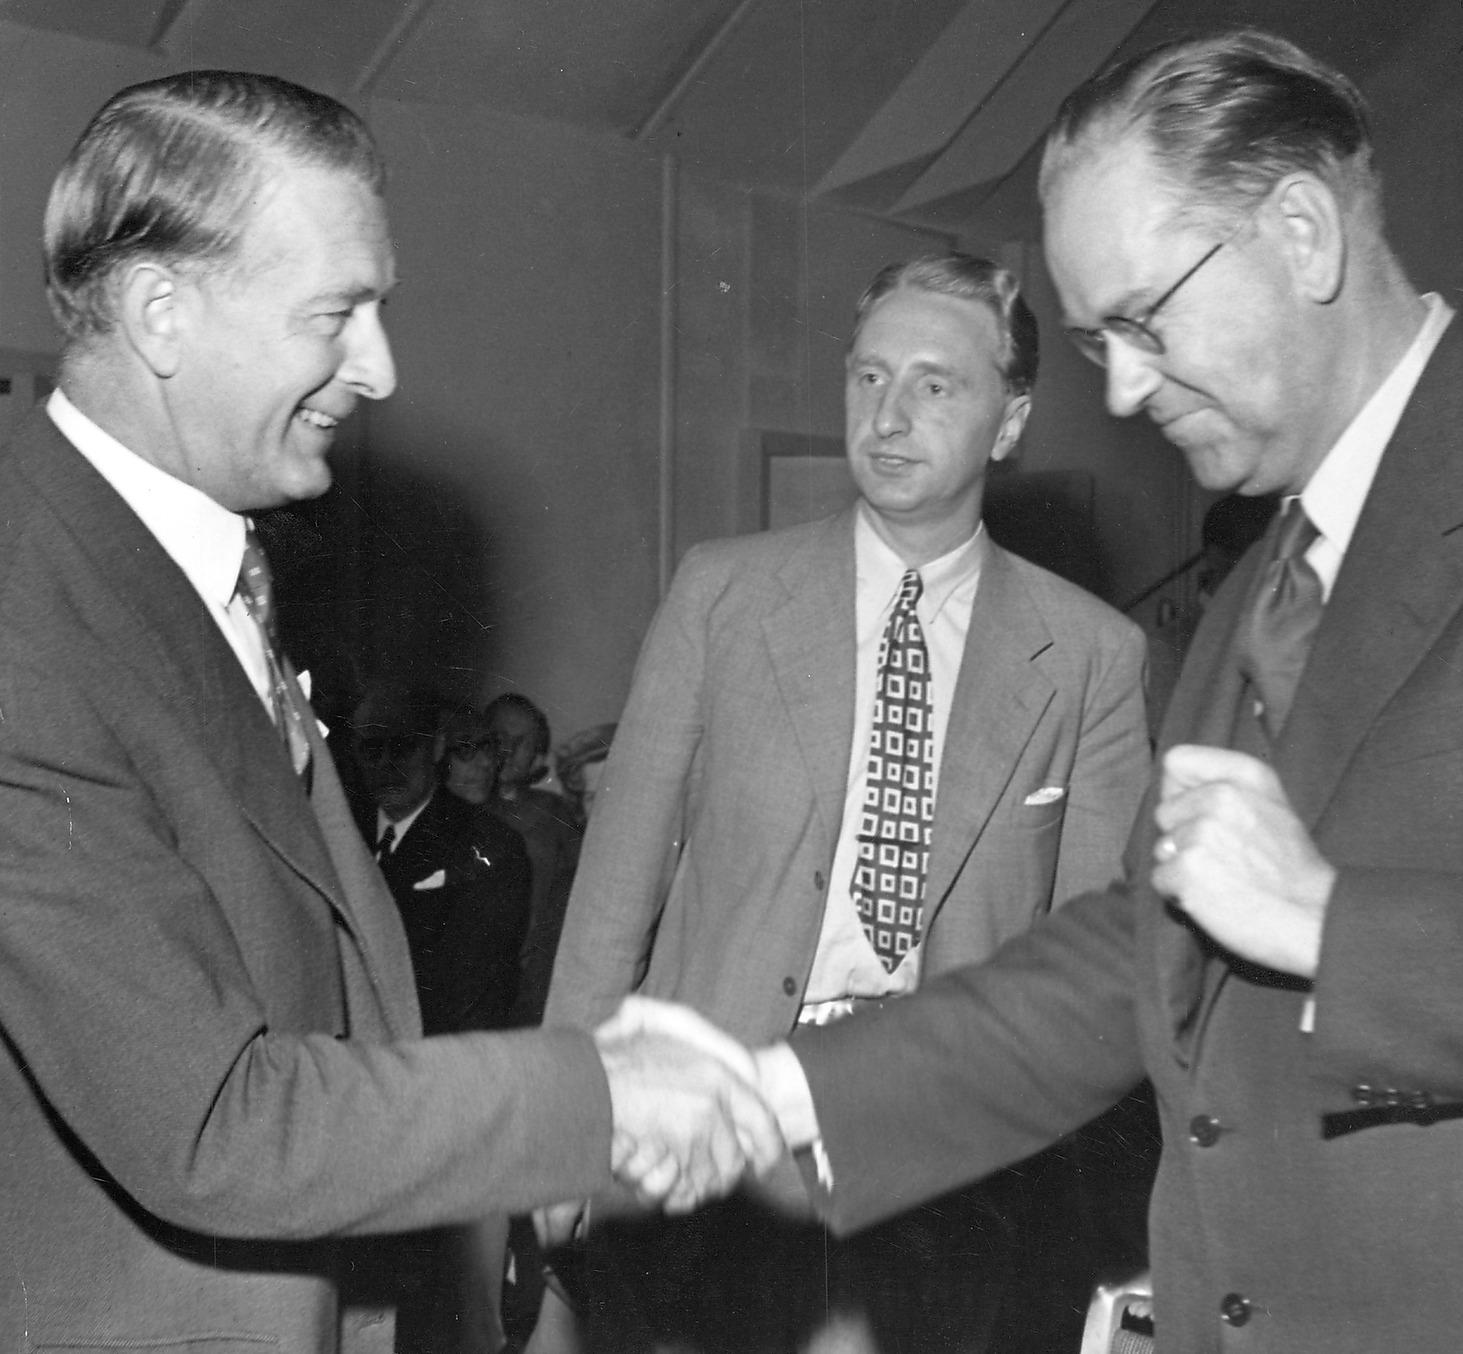 Folkpartiets Bertil Ohlin skakar hand med Tage Erlander, socialdemokratisk statsminister, i samband med valet 1950.